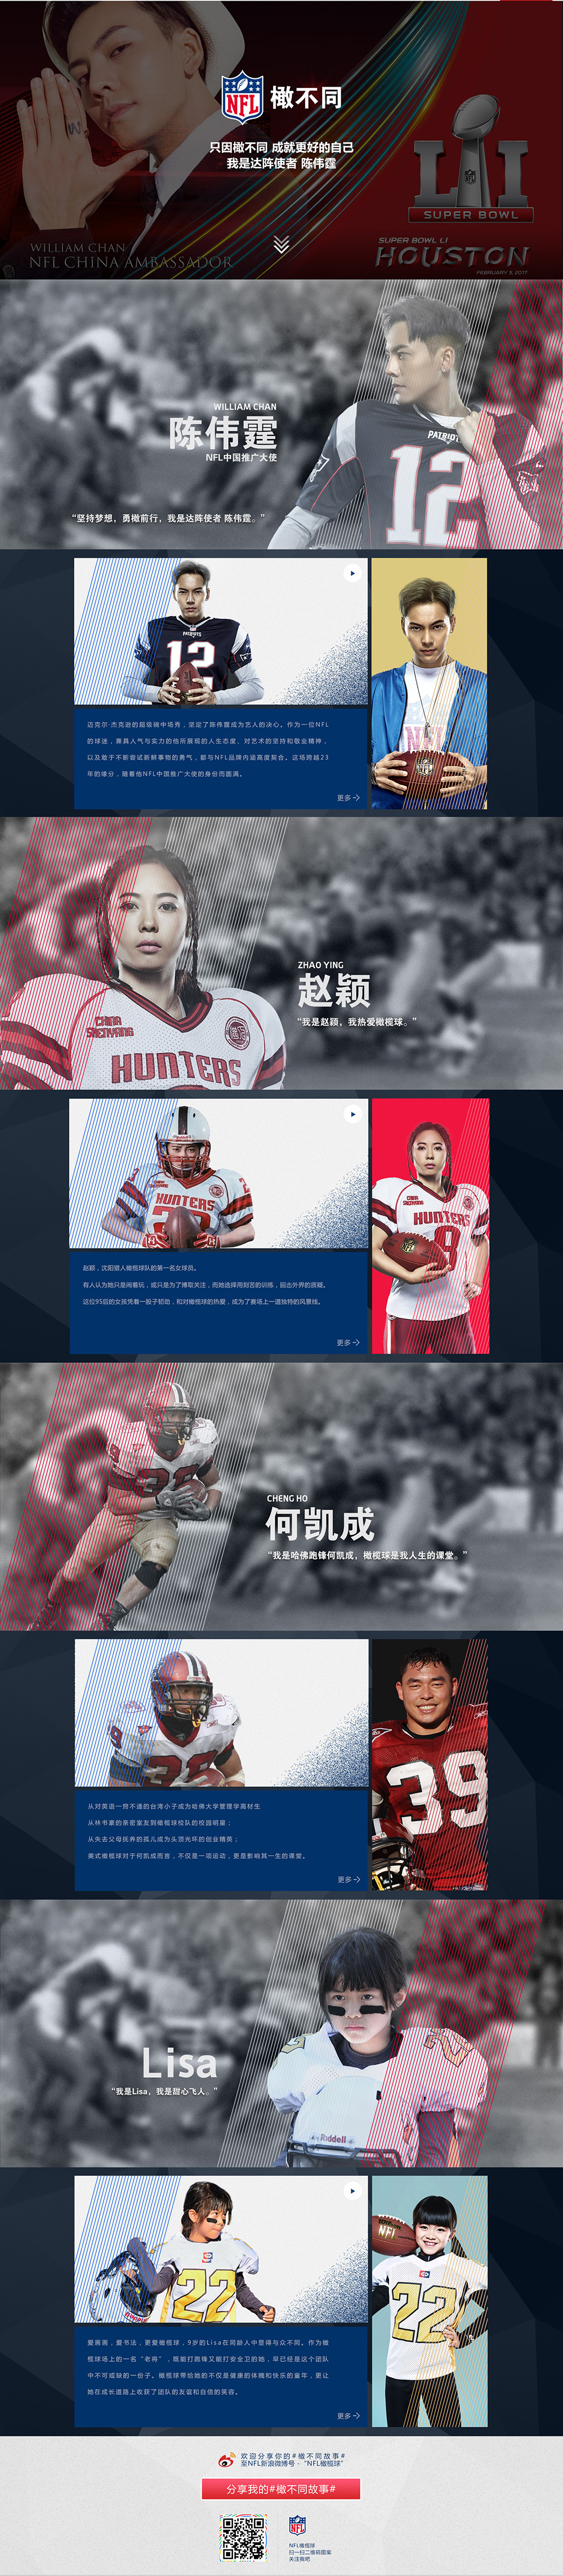 NFL活动微网站设计图0